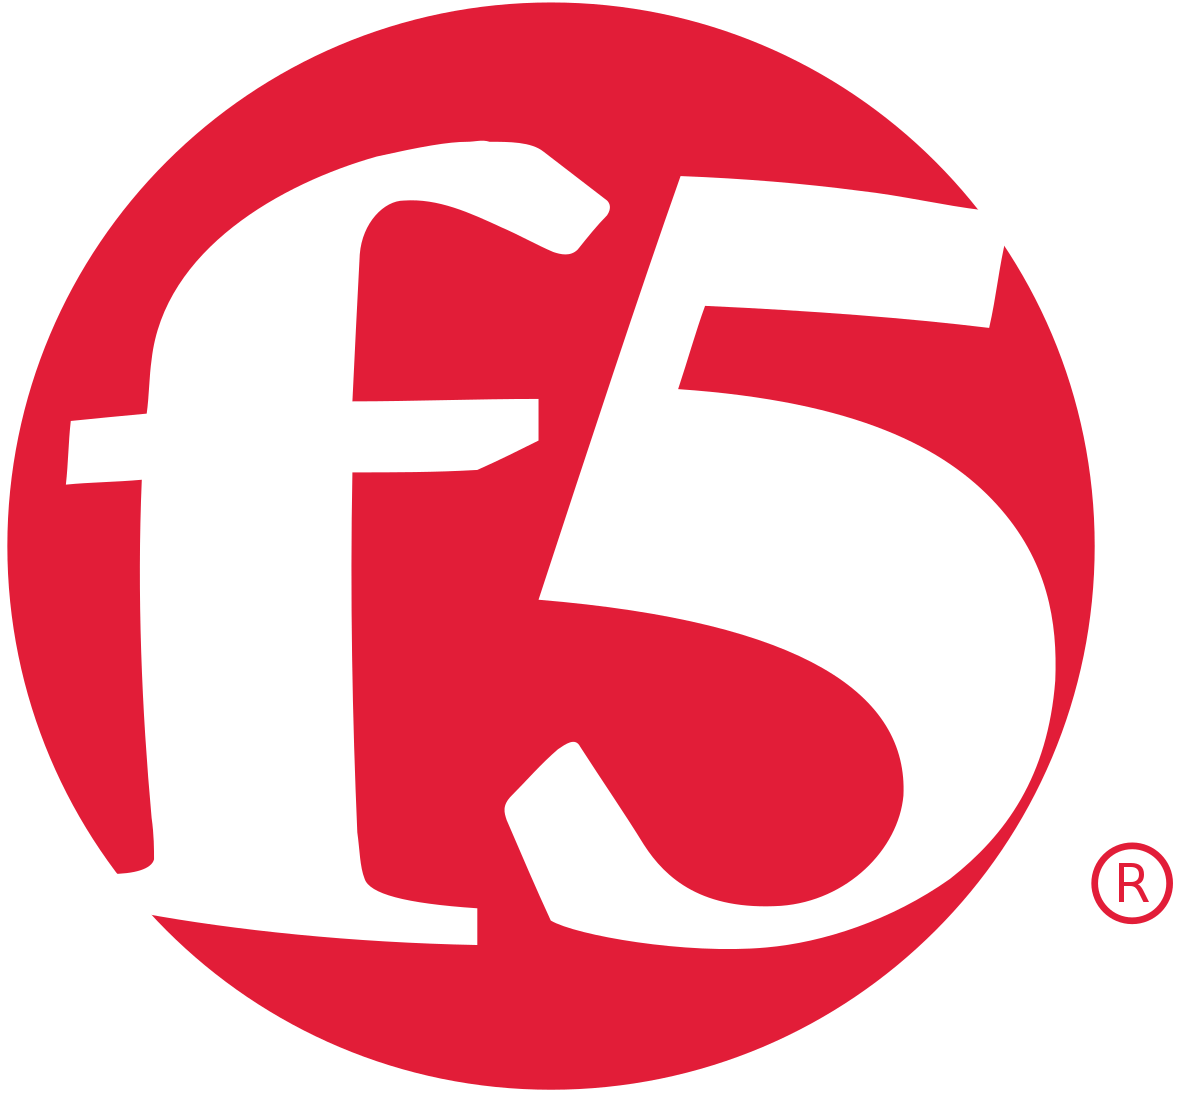 Big Red F Logo - F5 Networks